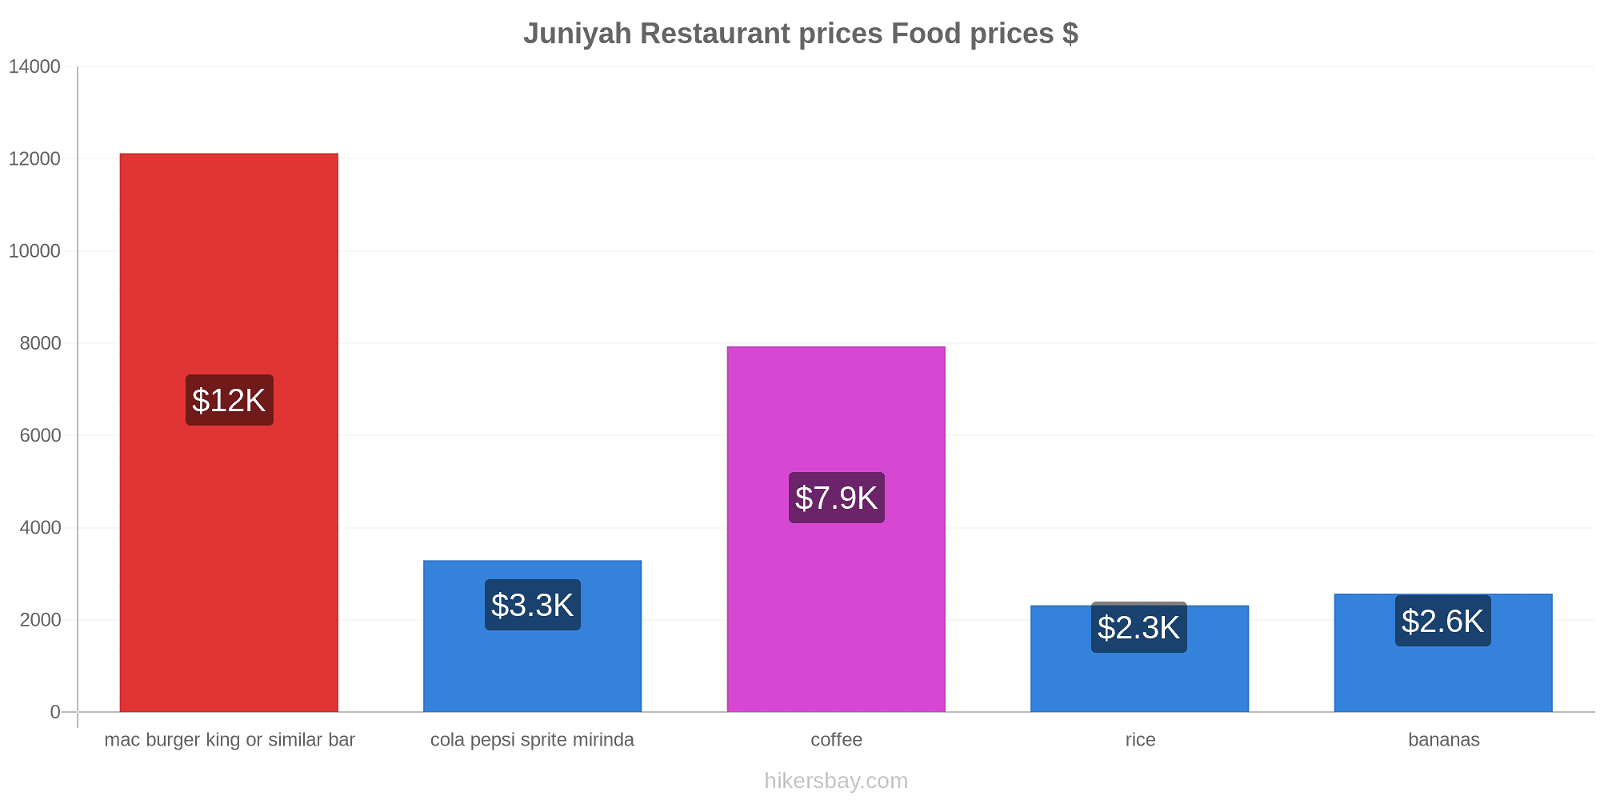 Juniyah price changes hikersbay.com